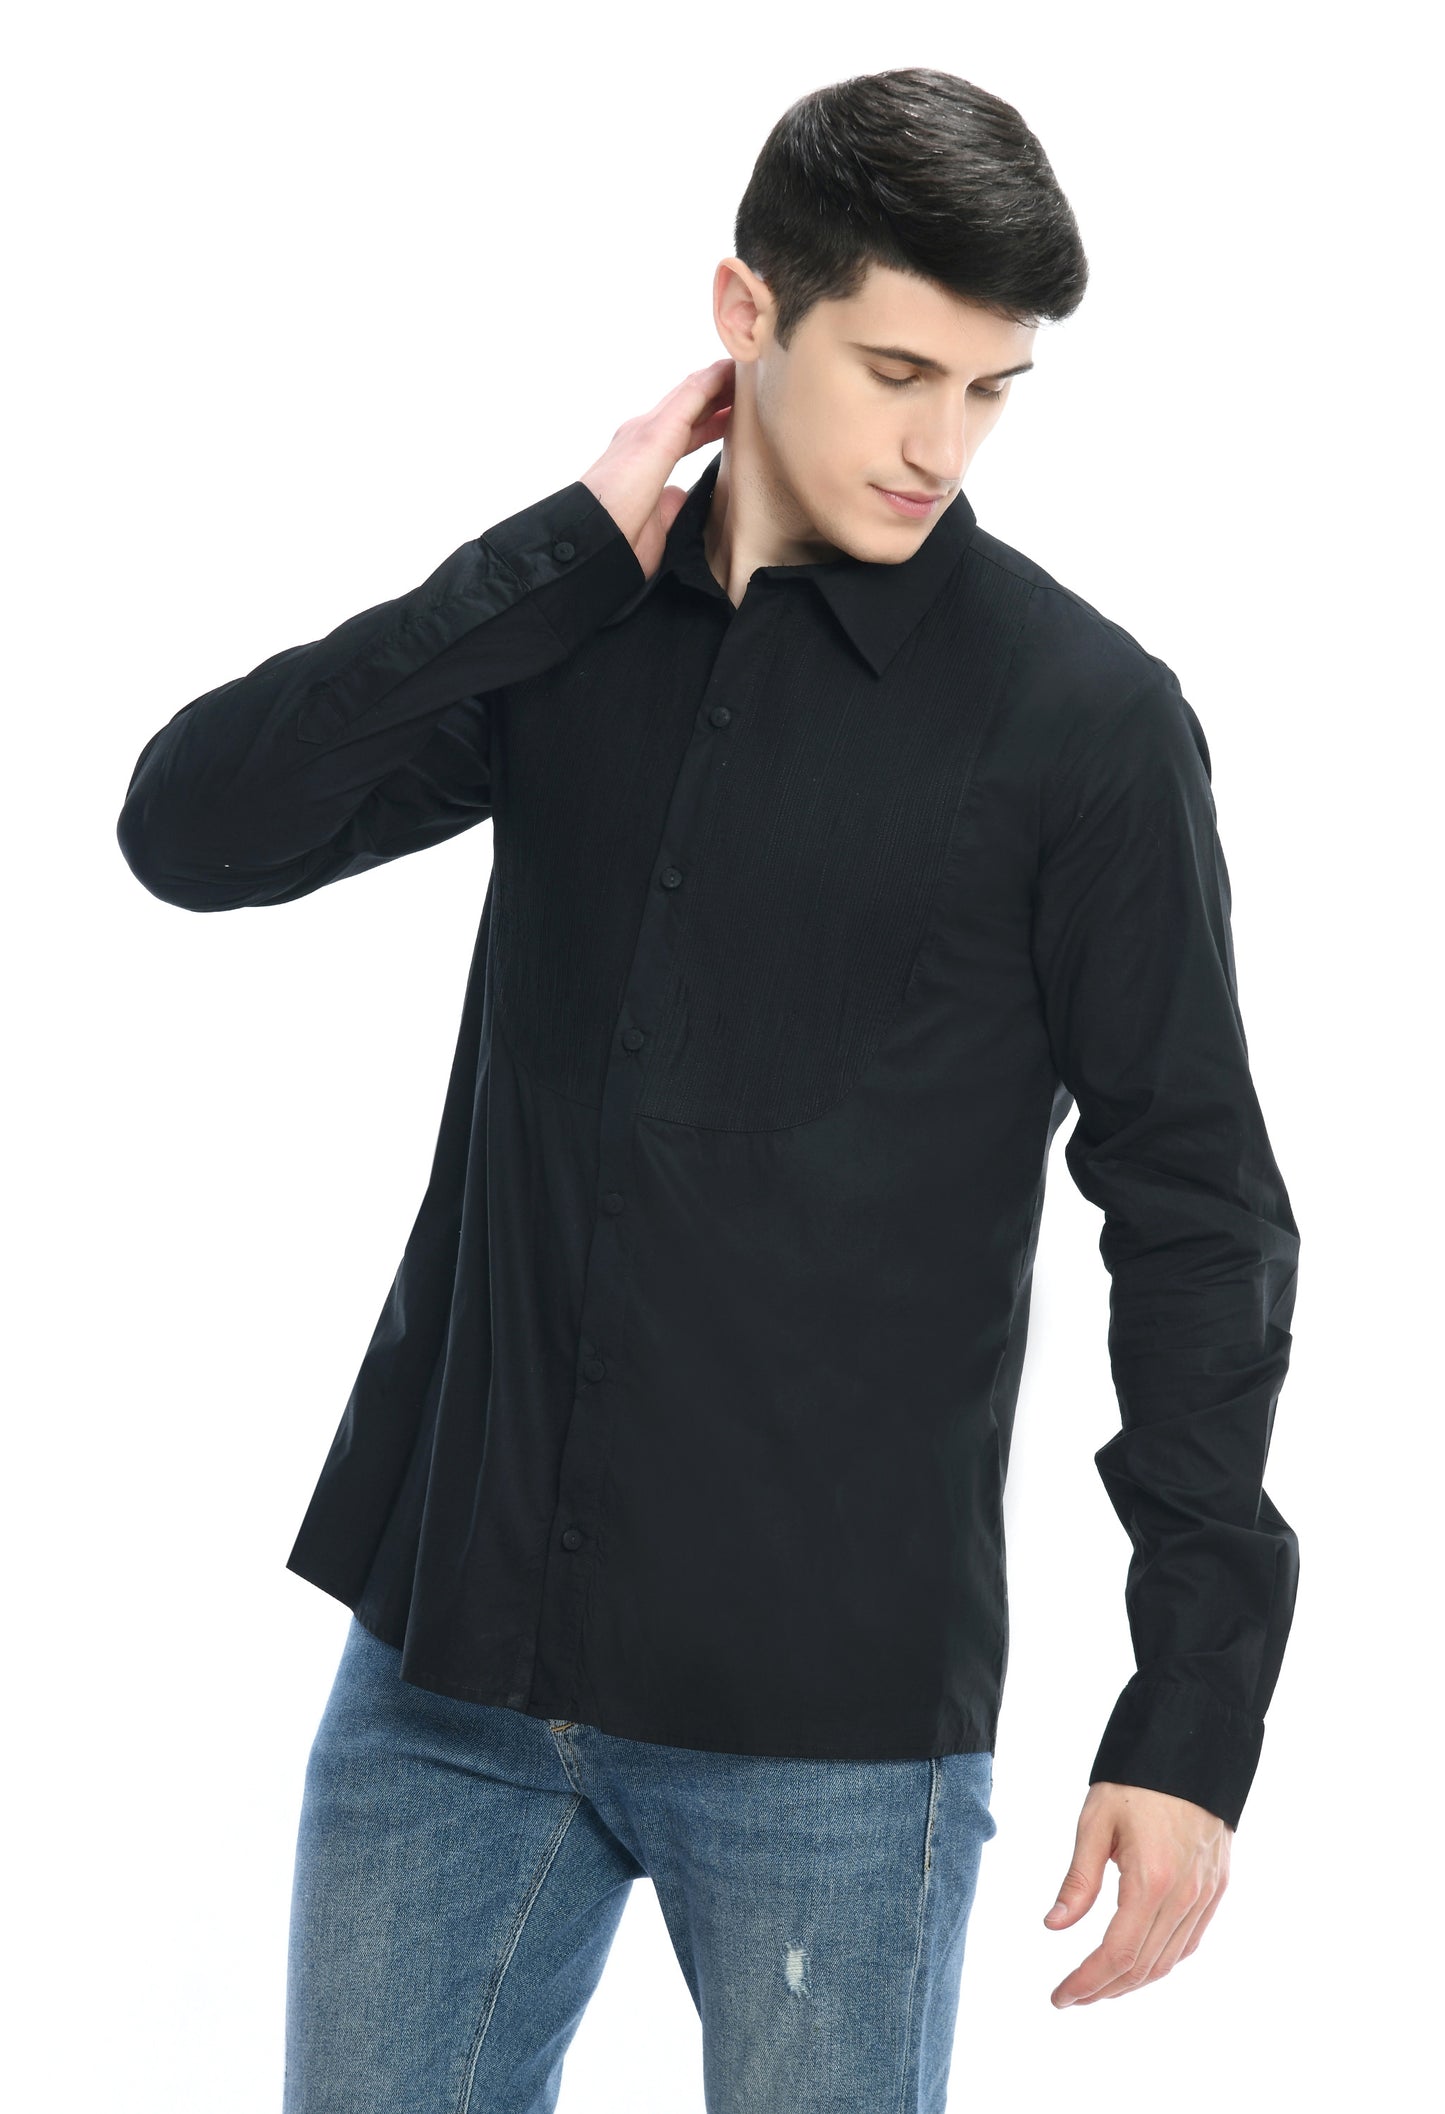 A black cotton shirt showcasing pintex around the neck.